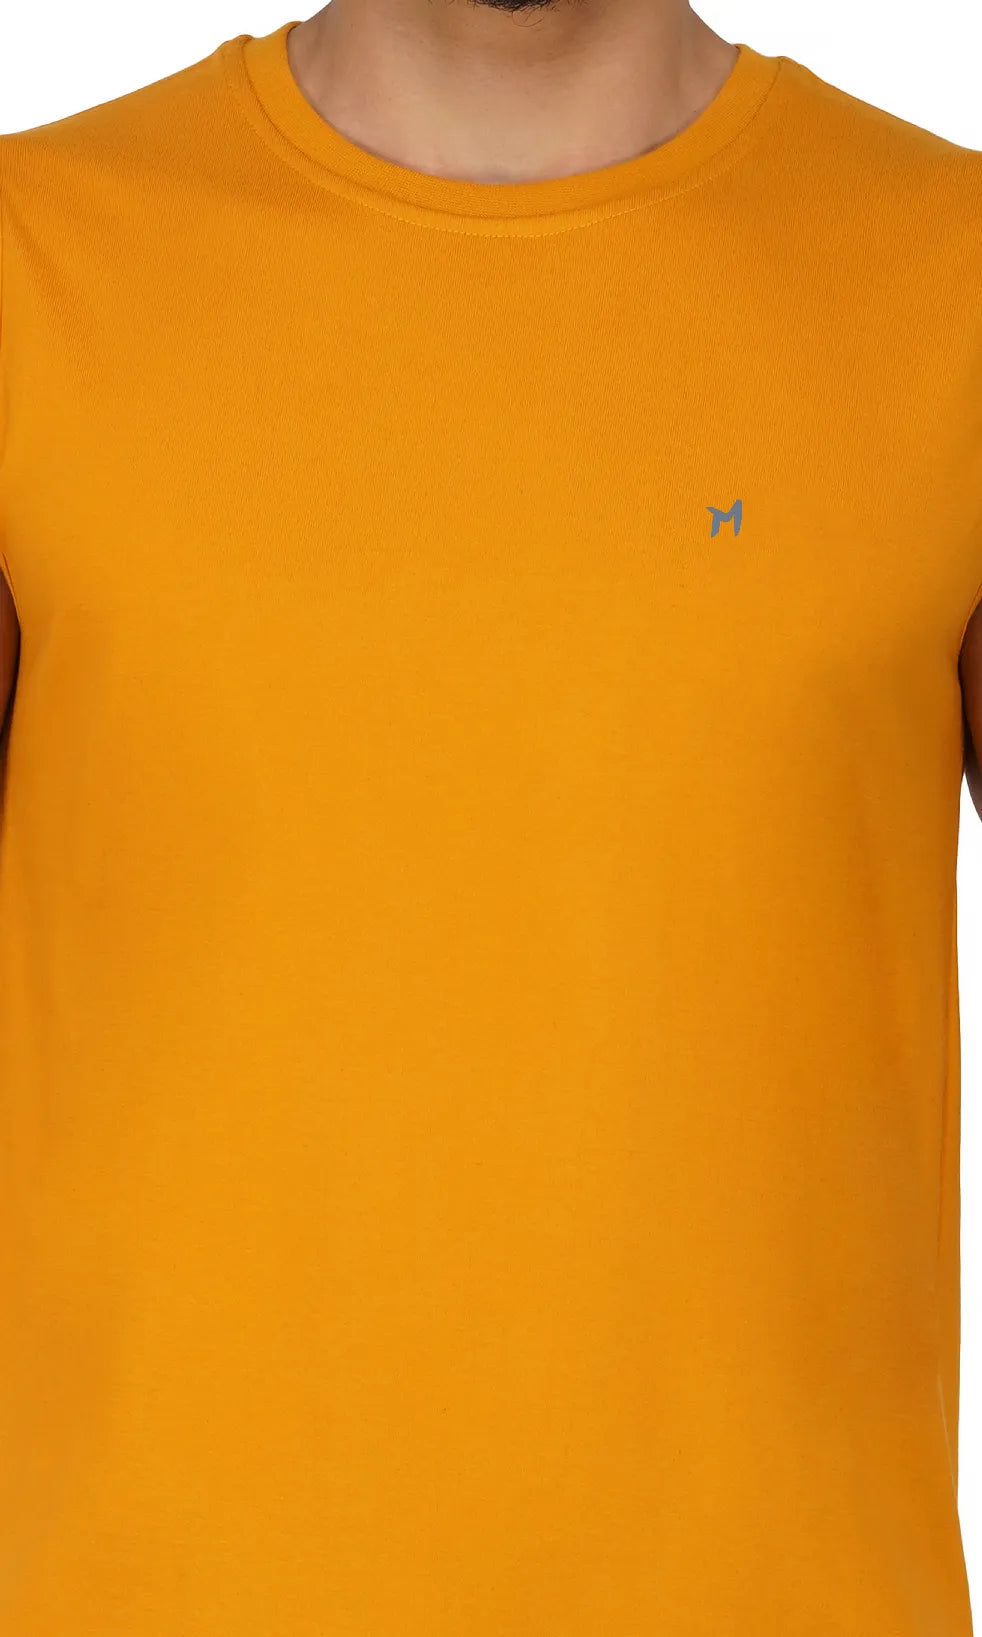 Mebadass Cotton Men's Sleeveless Regular Size Vests - Mustard Yellow